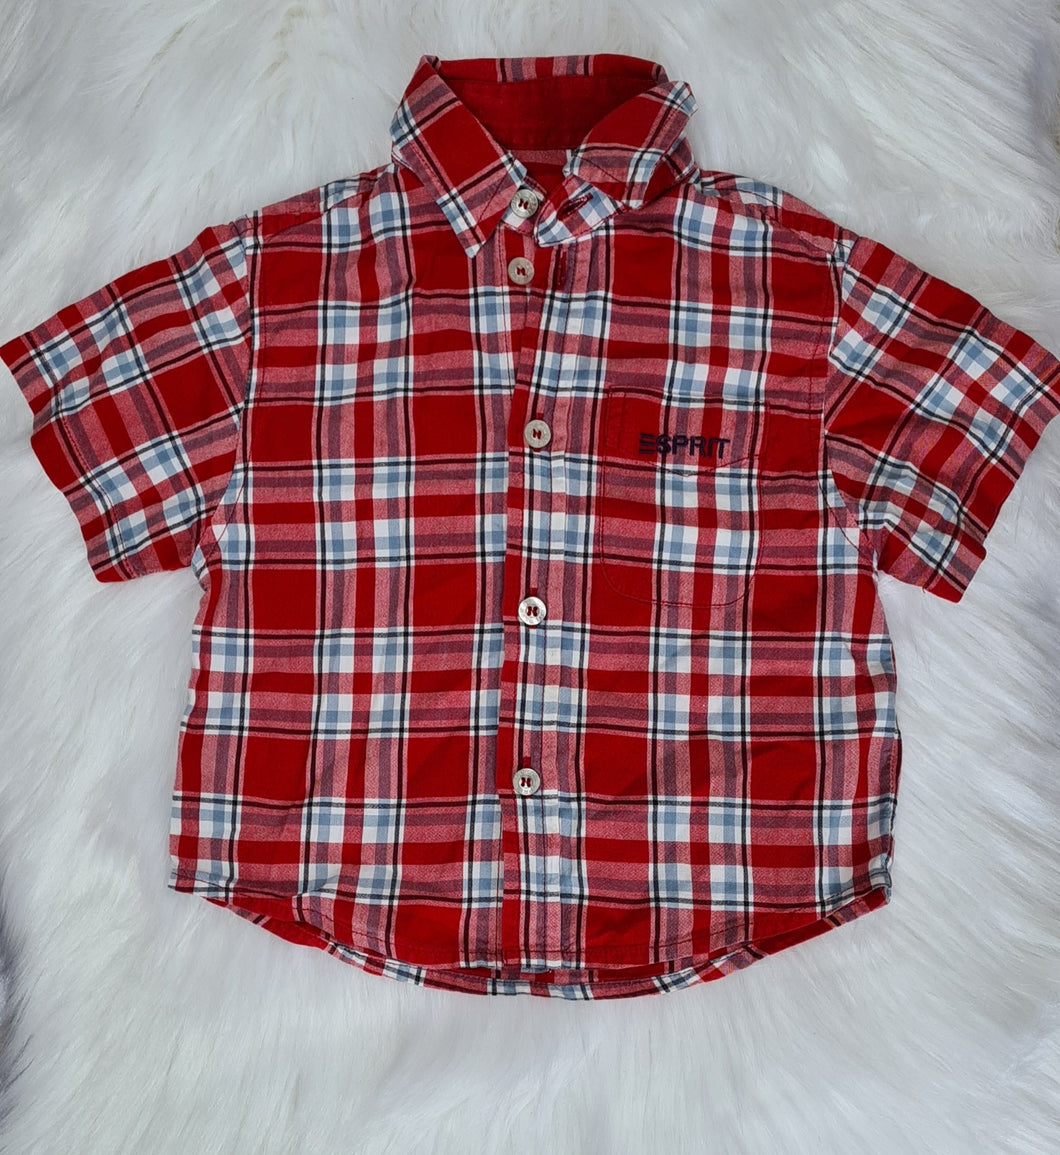 Boys 9-12 Months - Spirit - Red Checkered Shirt